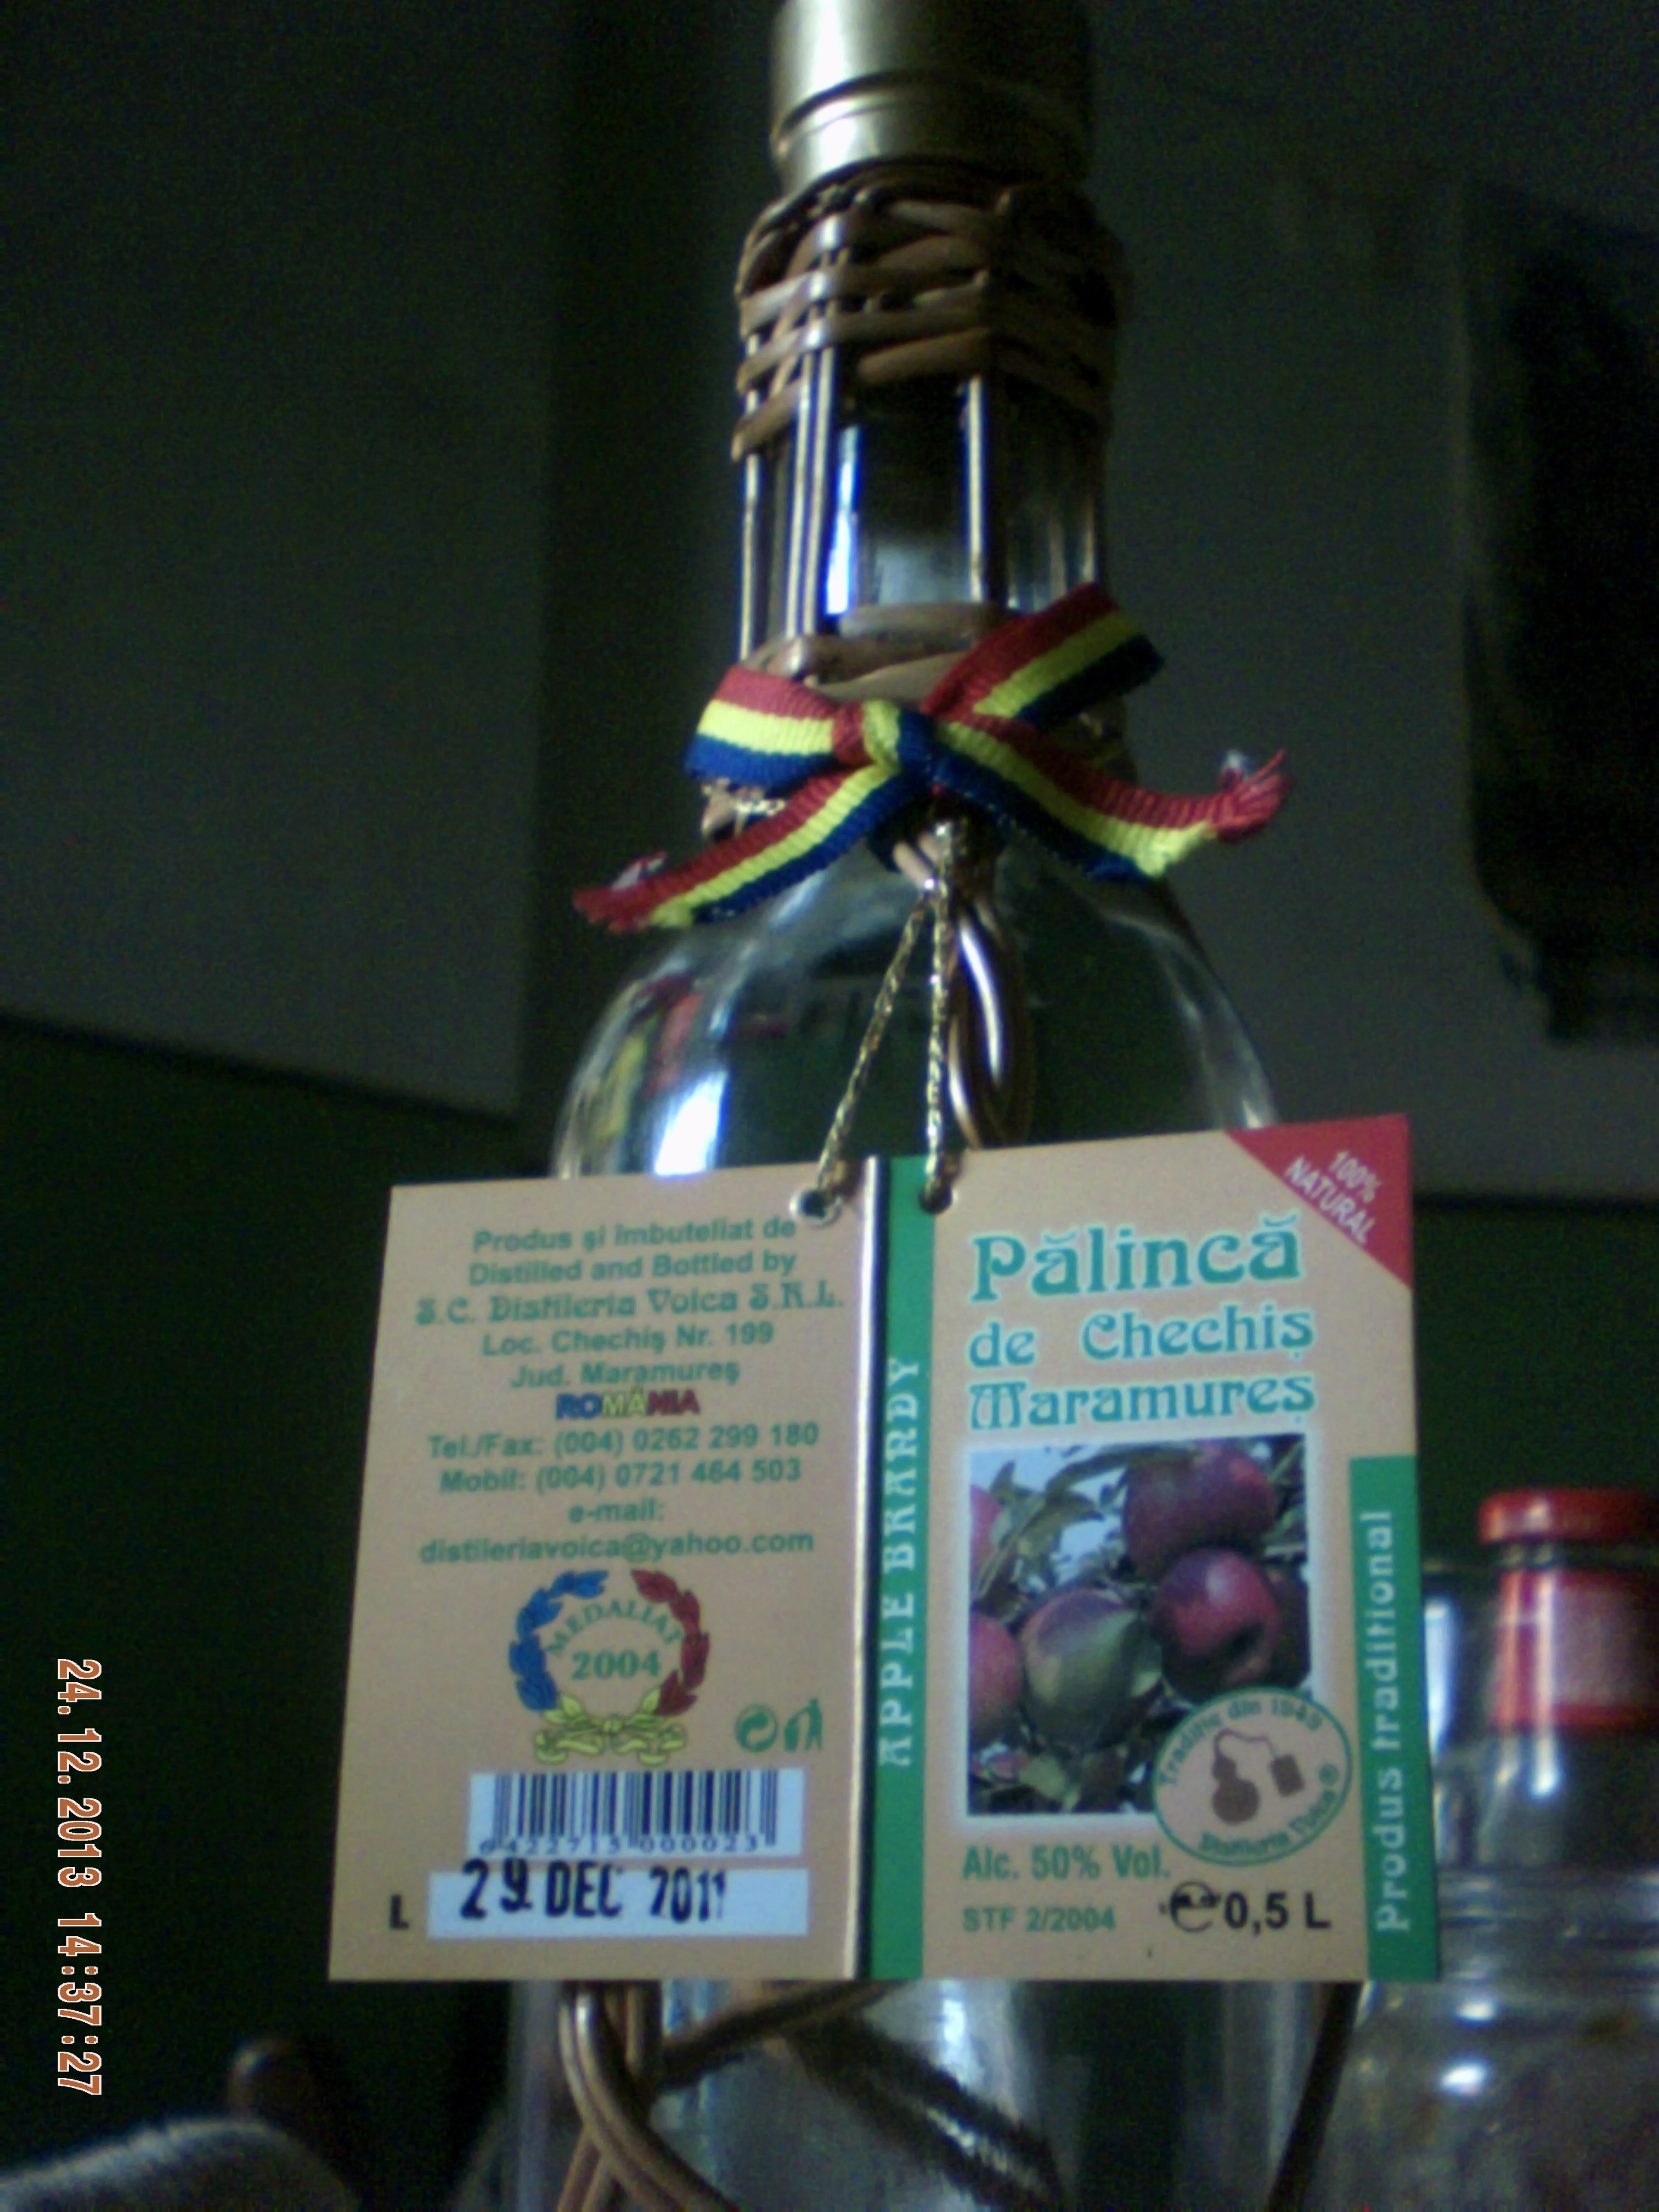 Romanian bottled palinca